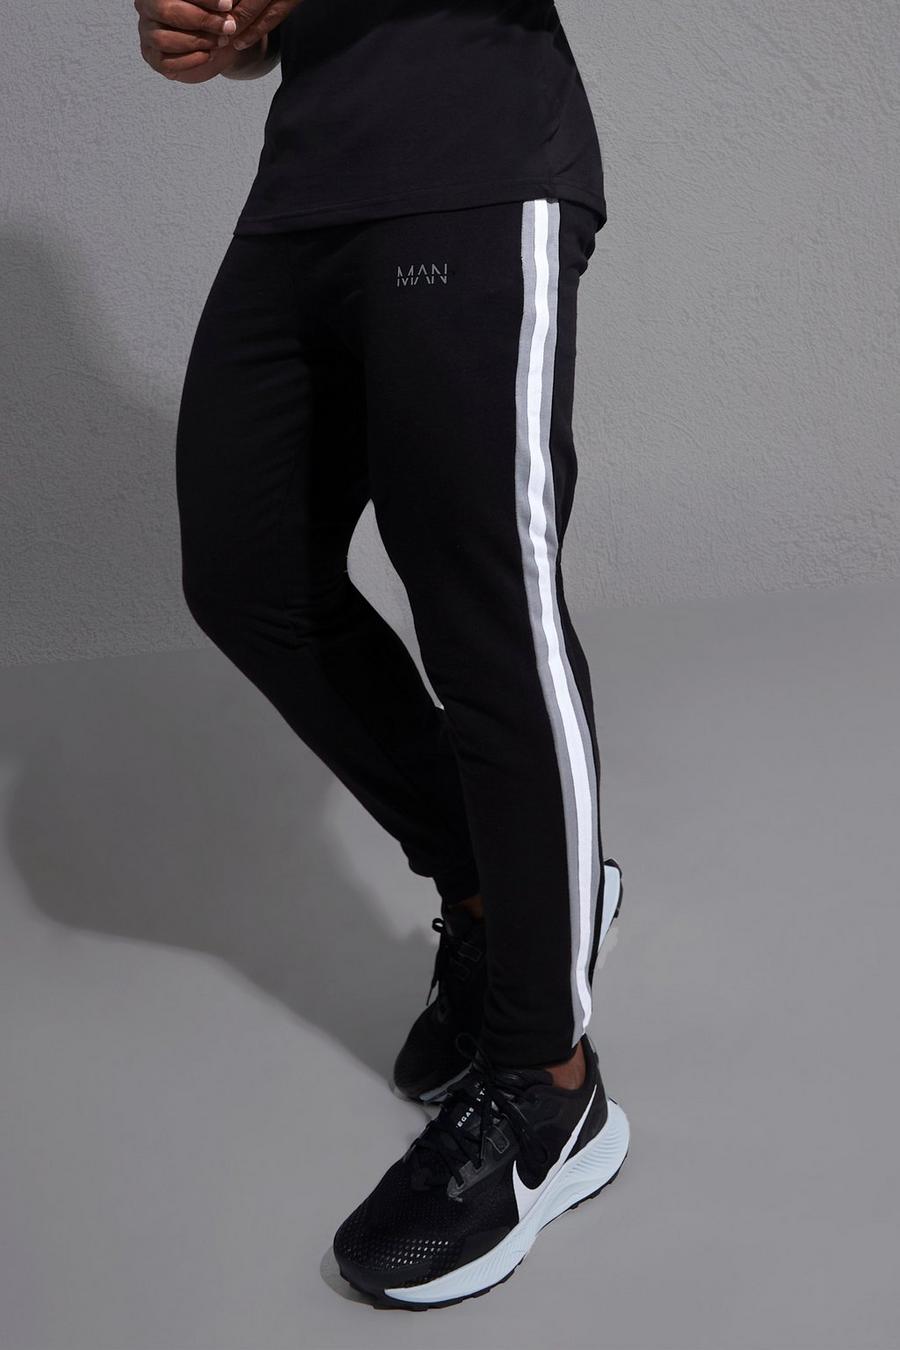 Pantalón deportivo MAN Active con franja lateral, Black nero image number 1